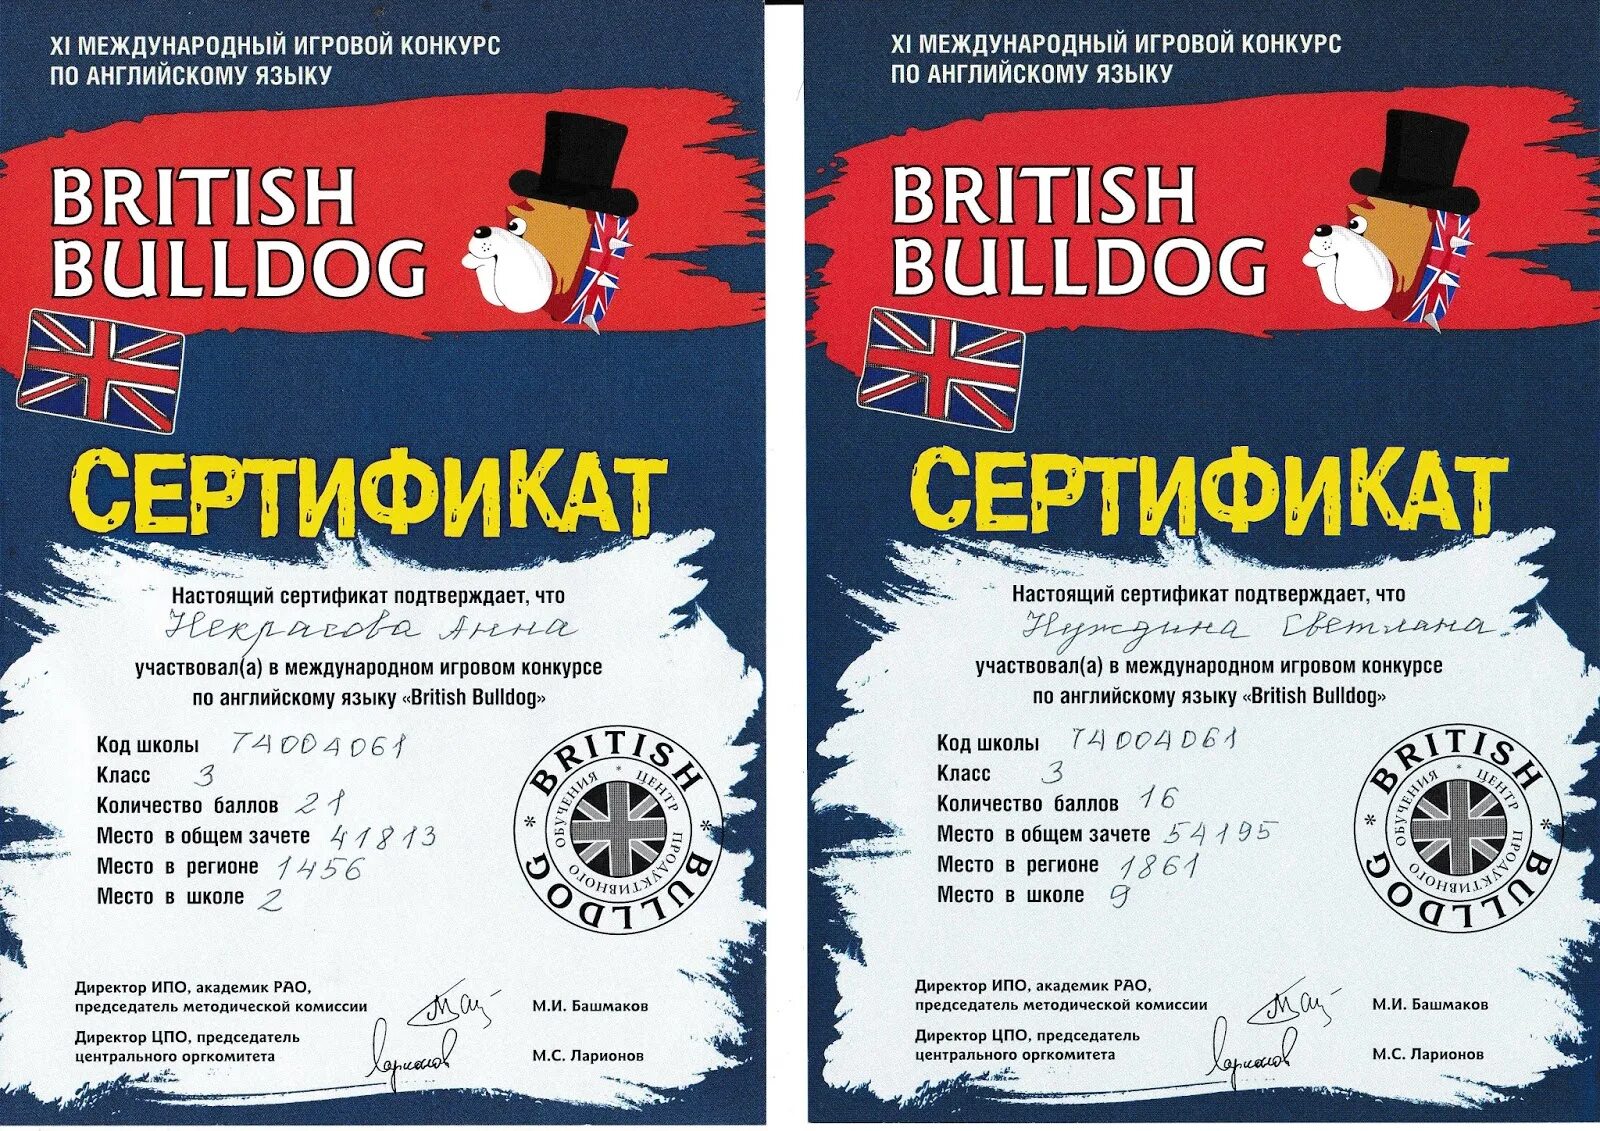 Бритиш бульдог сертификаты 2021. British Bulldog сертификат. Британский бульдог грамота.